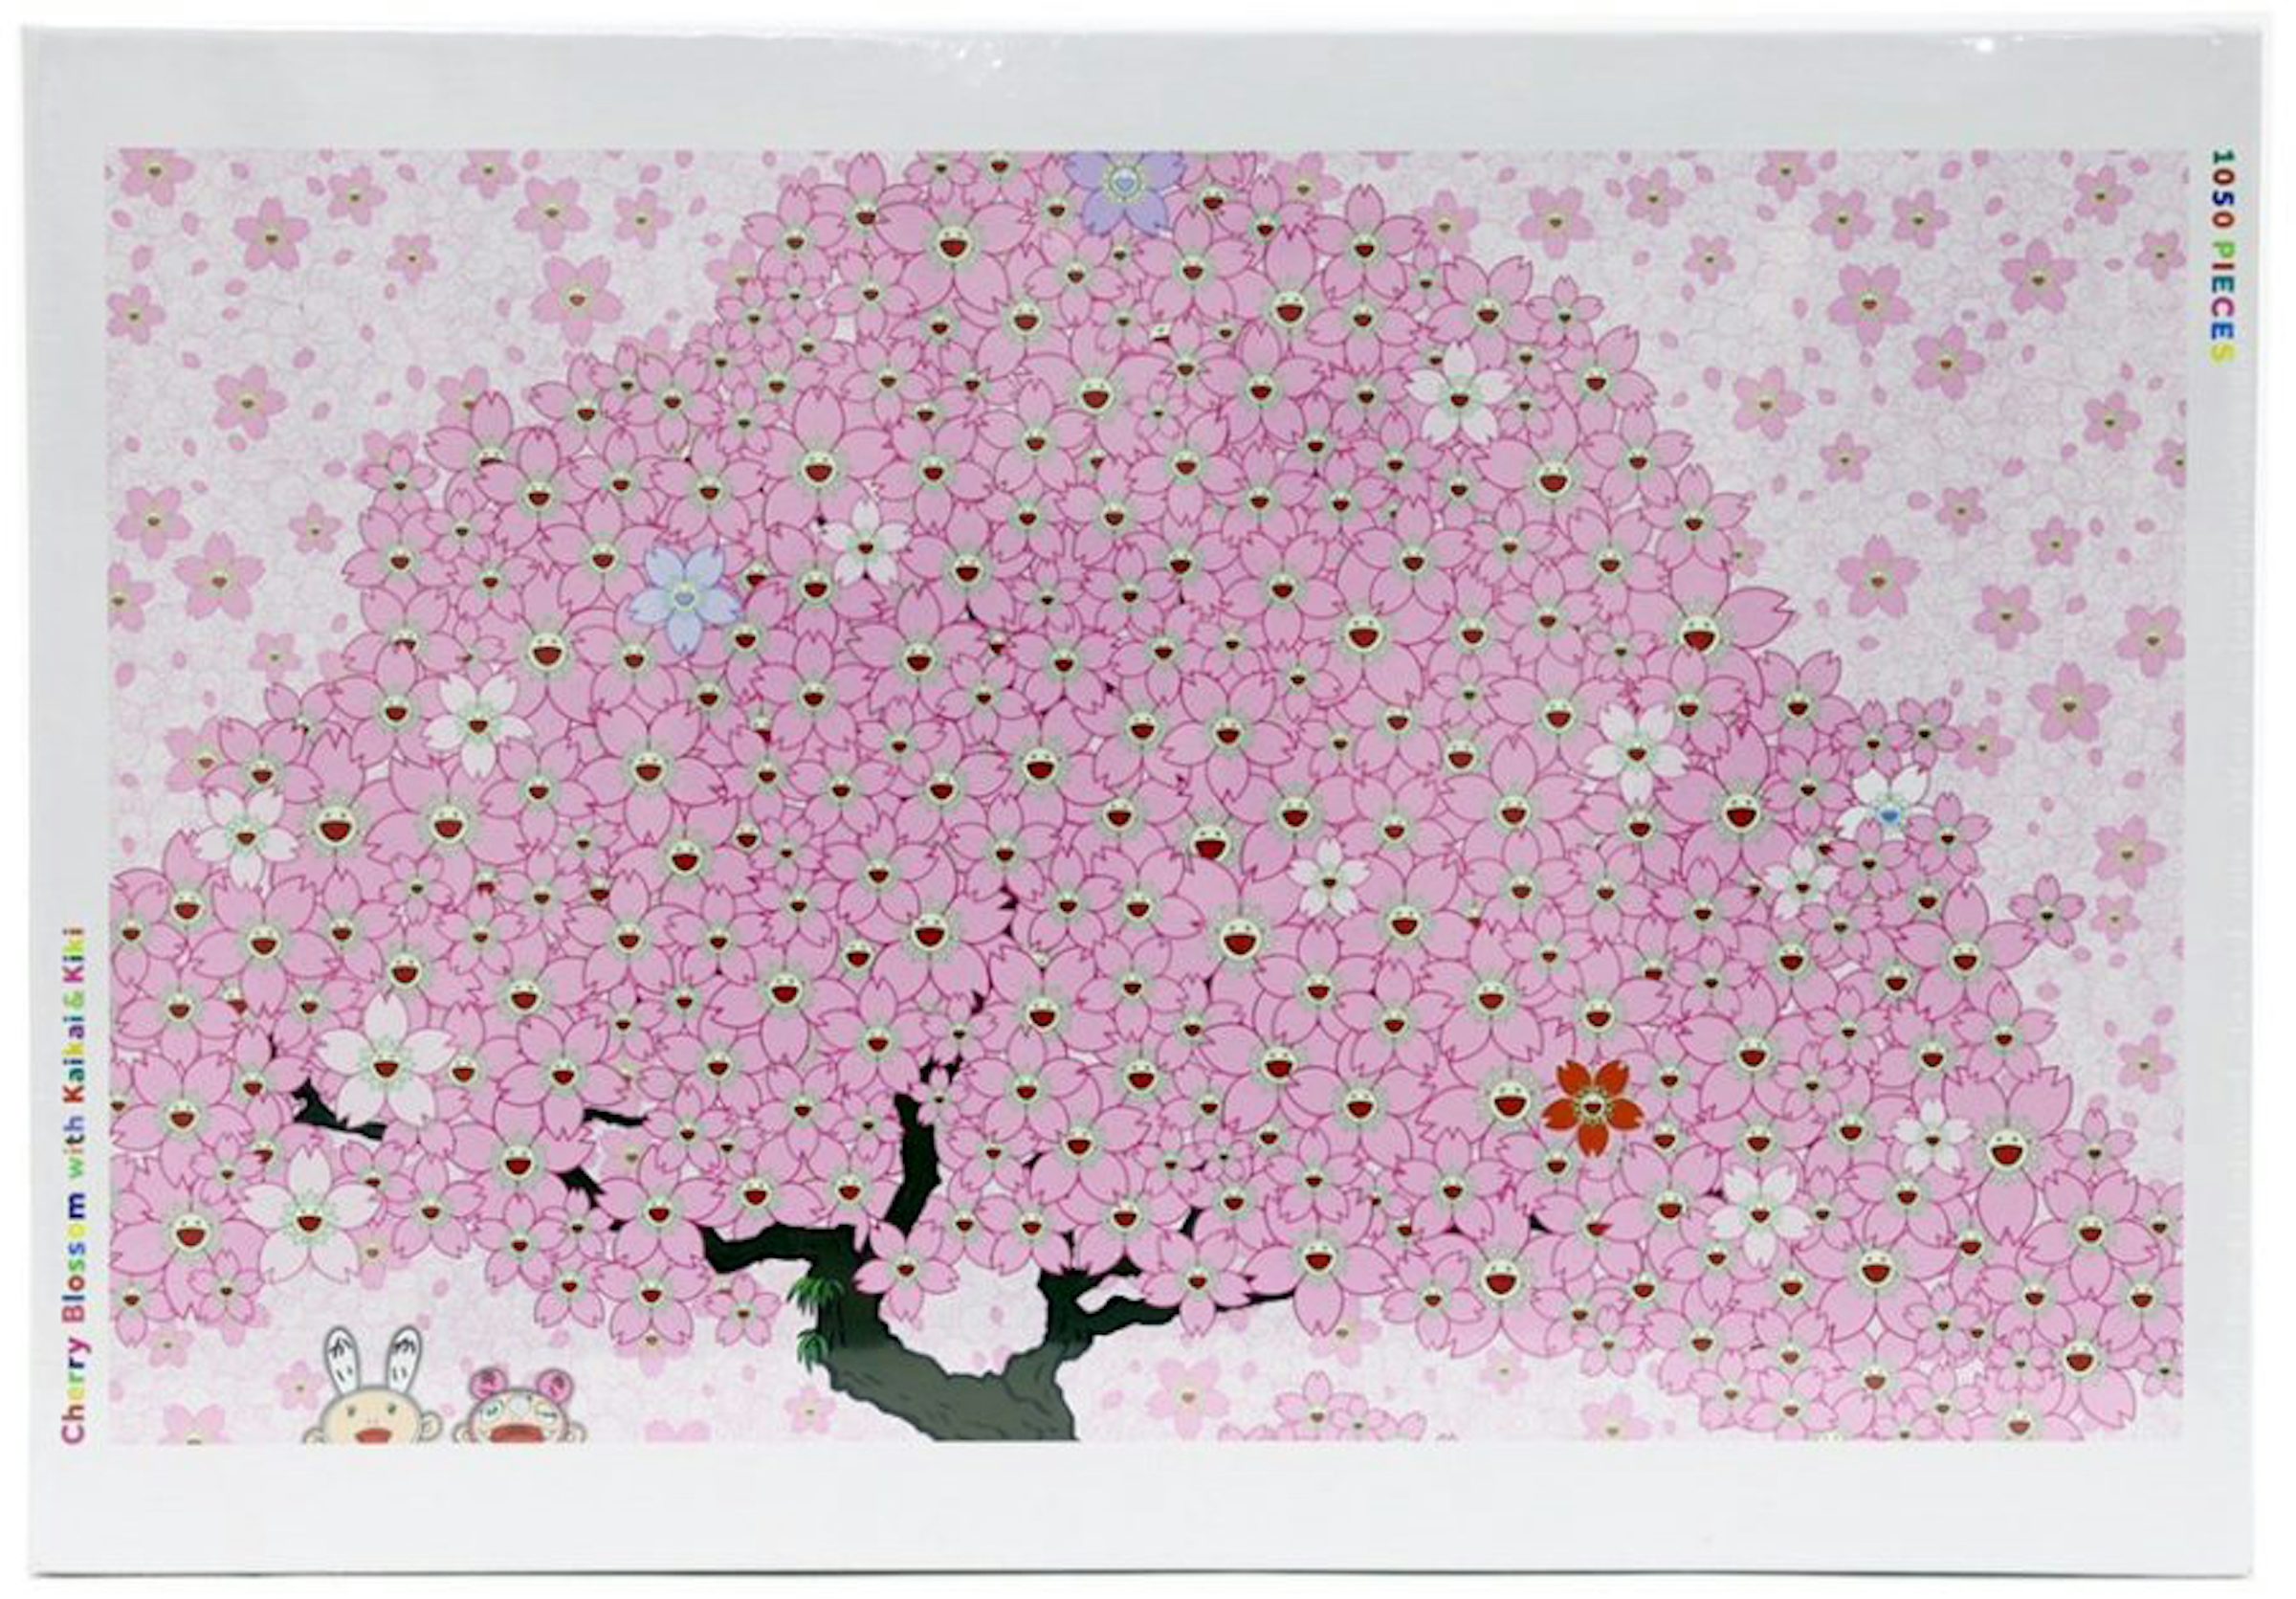 Takashi Murakami  Cherry blossoms bloom. Kaikai Kiki. (2020